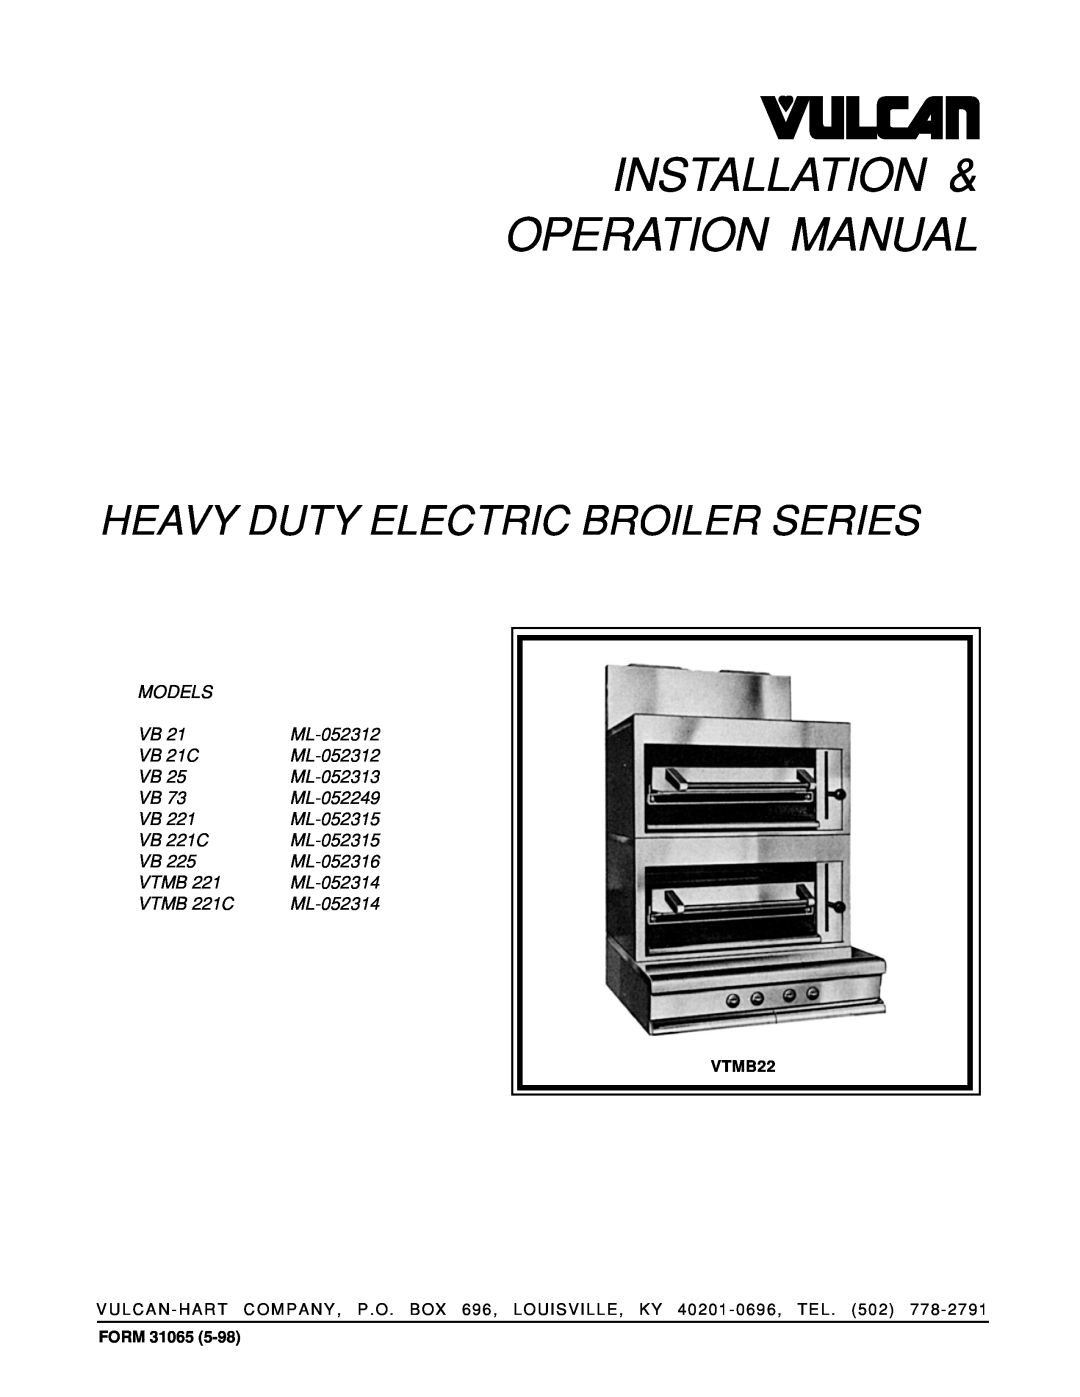 Vulcan-Hart VB 21 ML-052312, VB 25 ML-052313 operation manual Heavy Duty Electric Broiler Series 